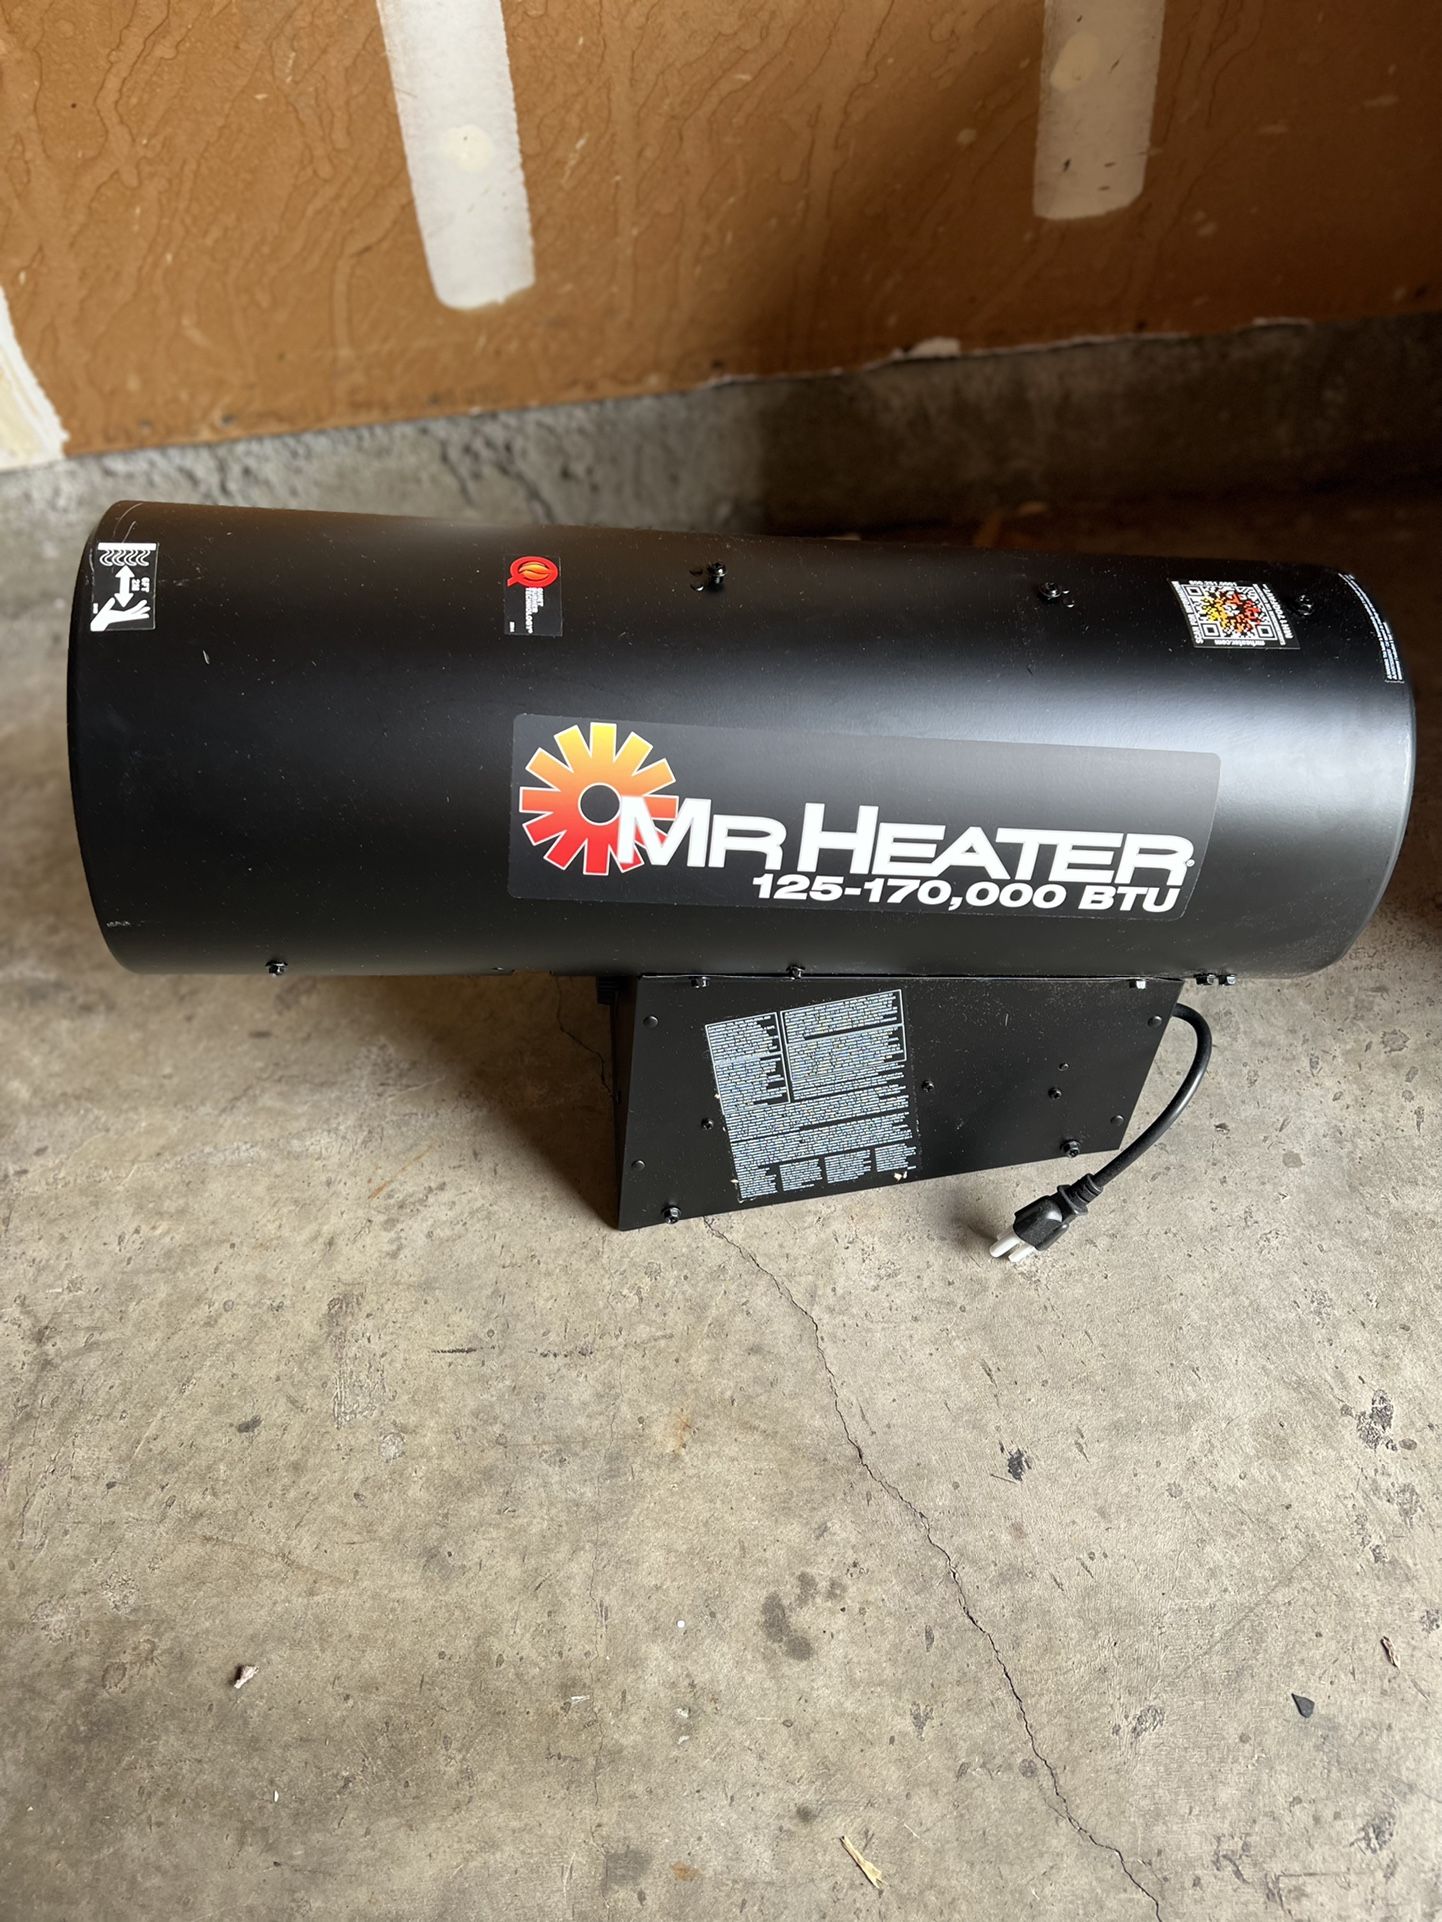 Mr Heater Gas Heater 170,000 Btu